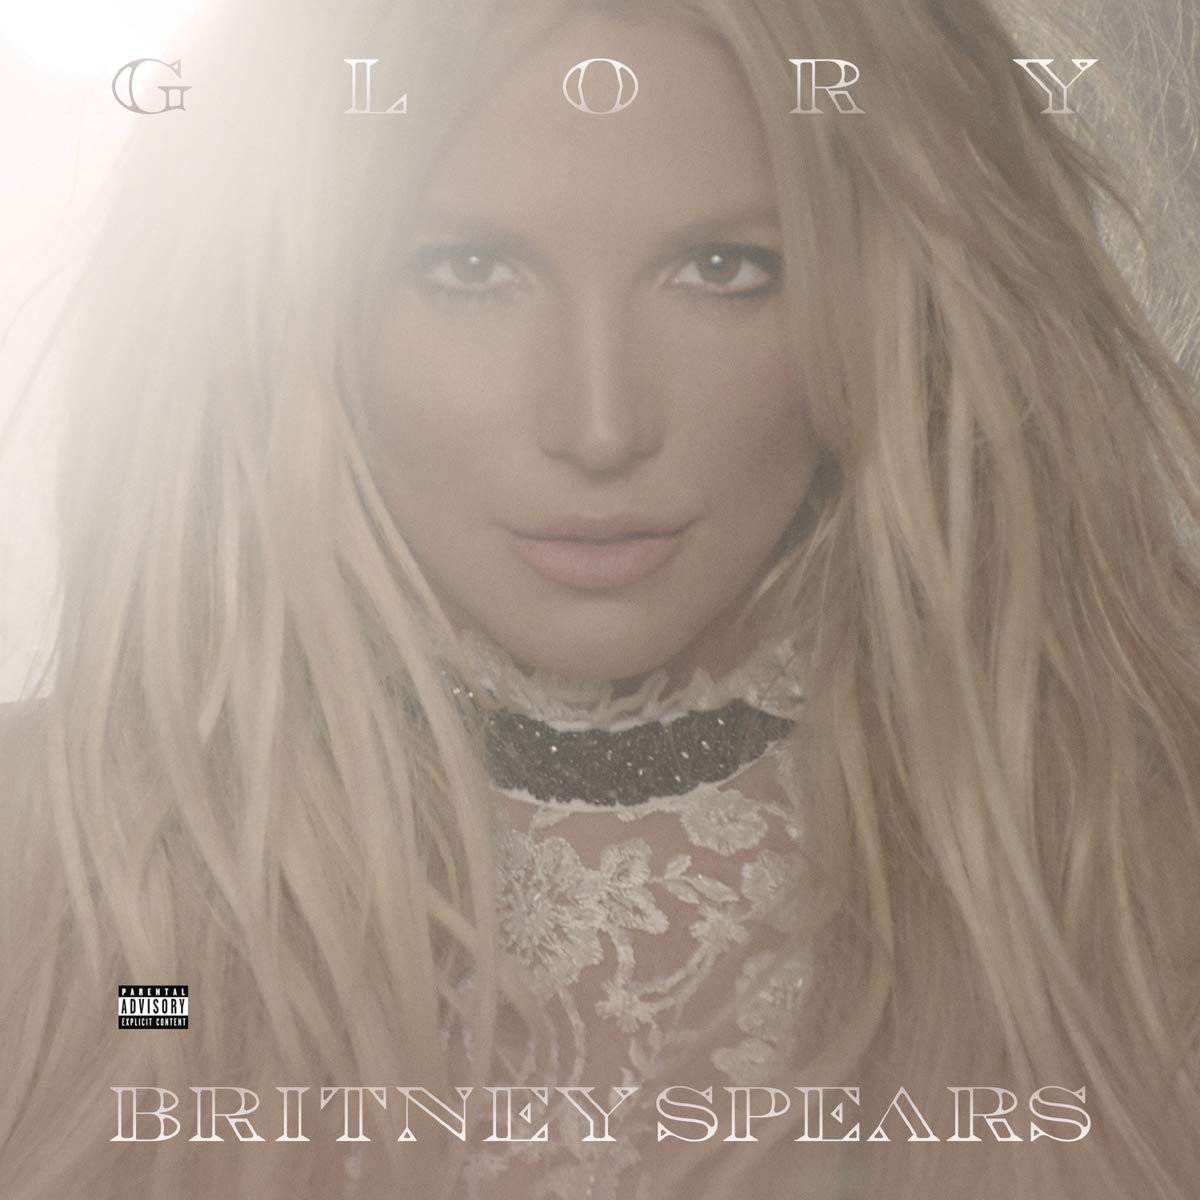 Britney Spears - Glory Original Vinyl Cover 1